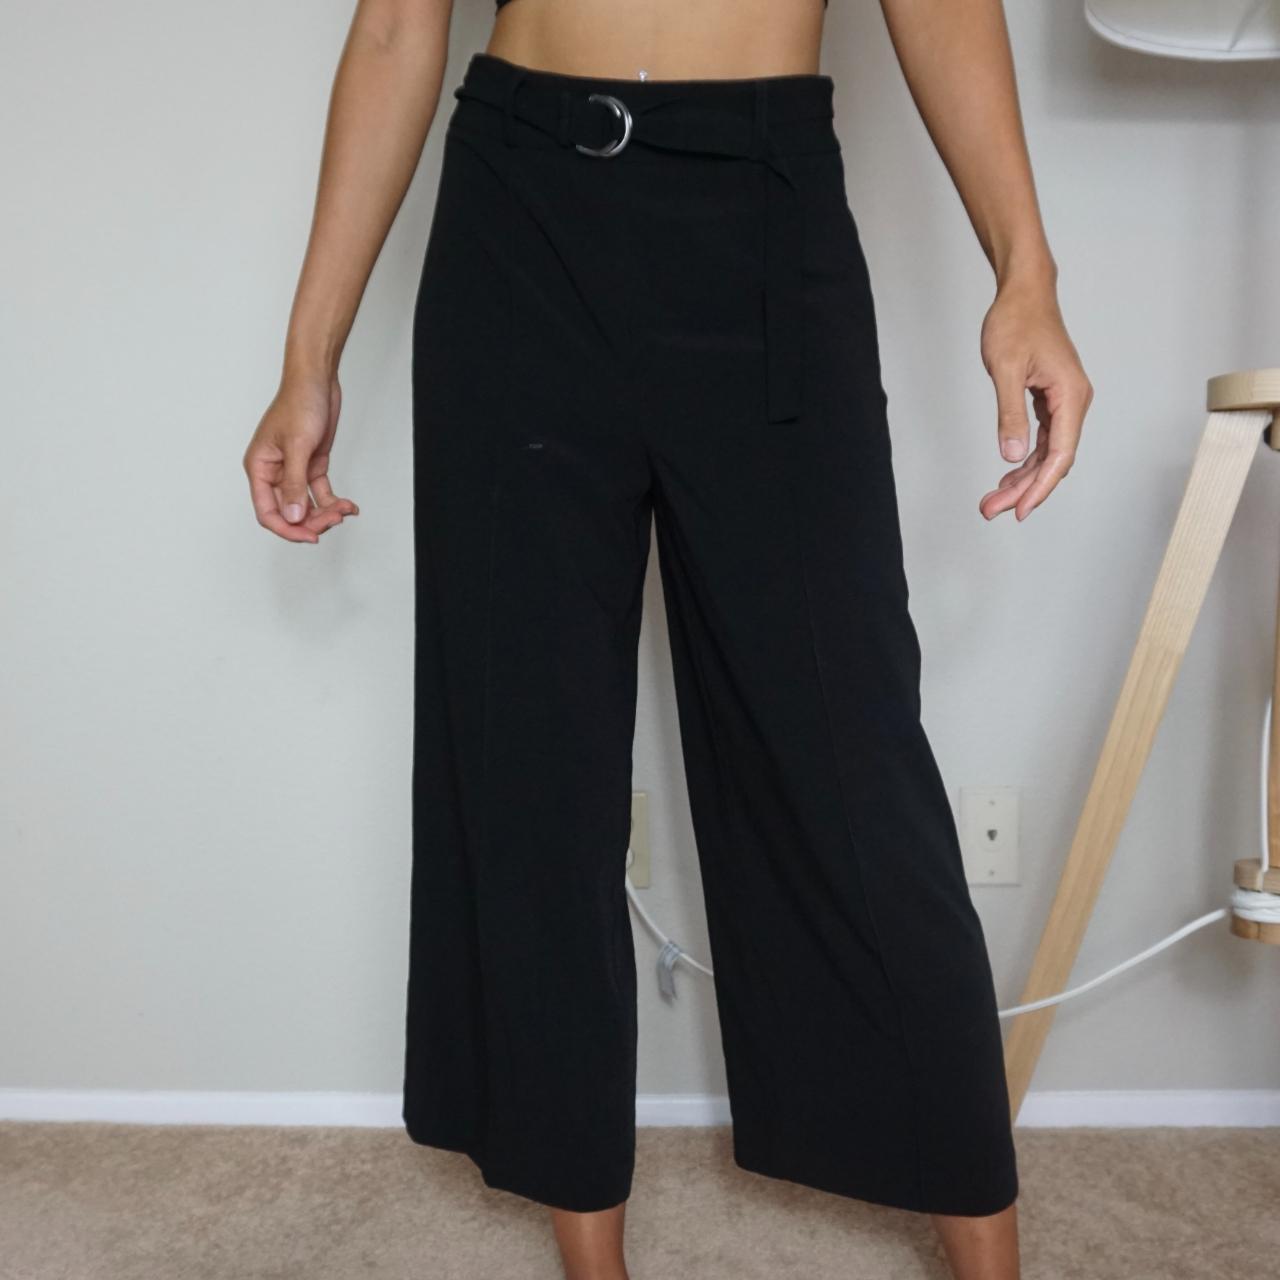 Lululemon Dress Pants Women's Black New with Tags 28